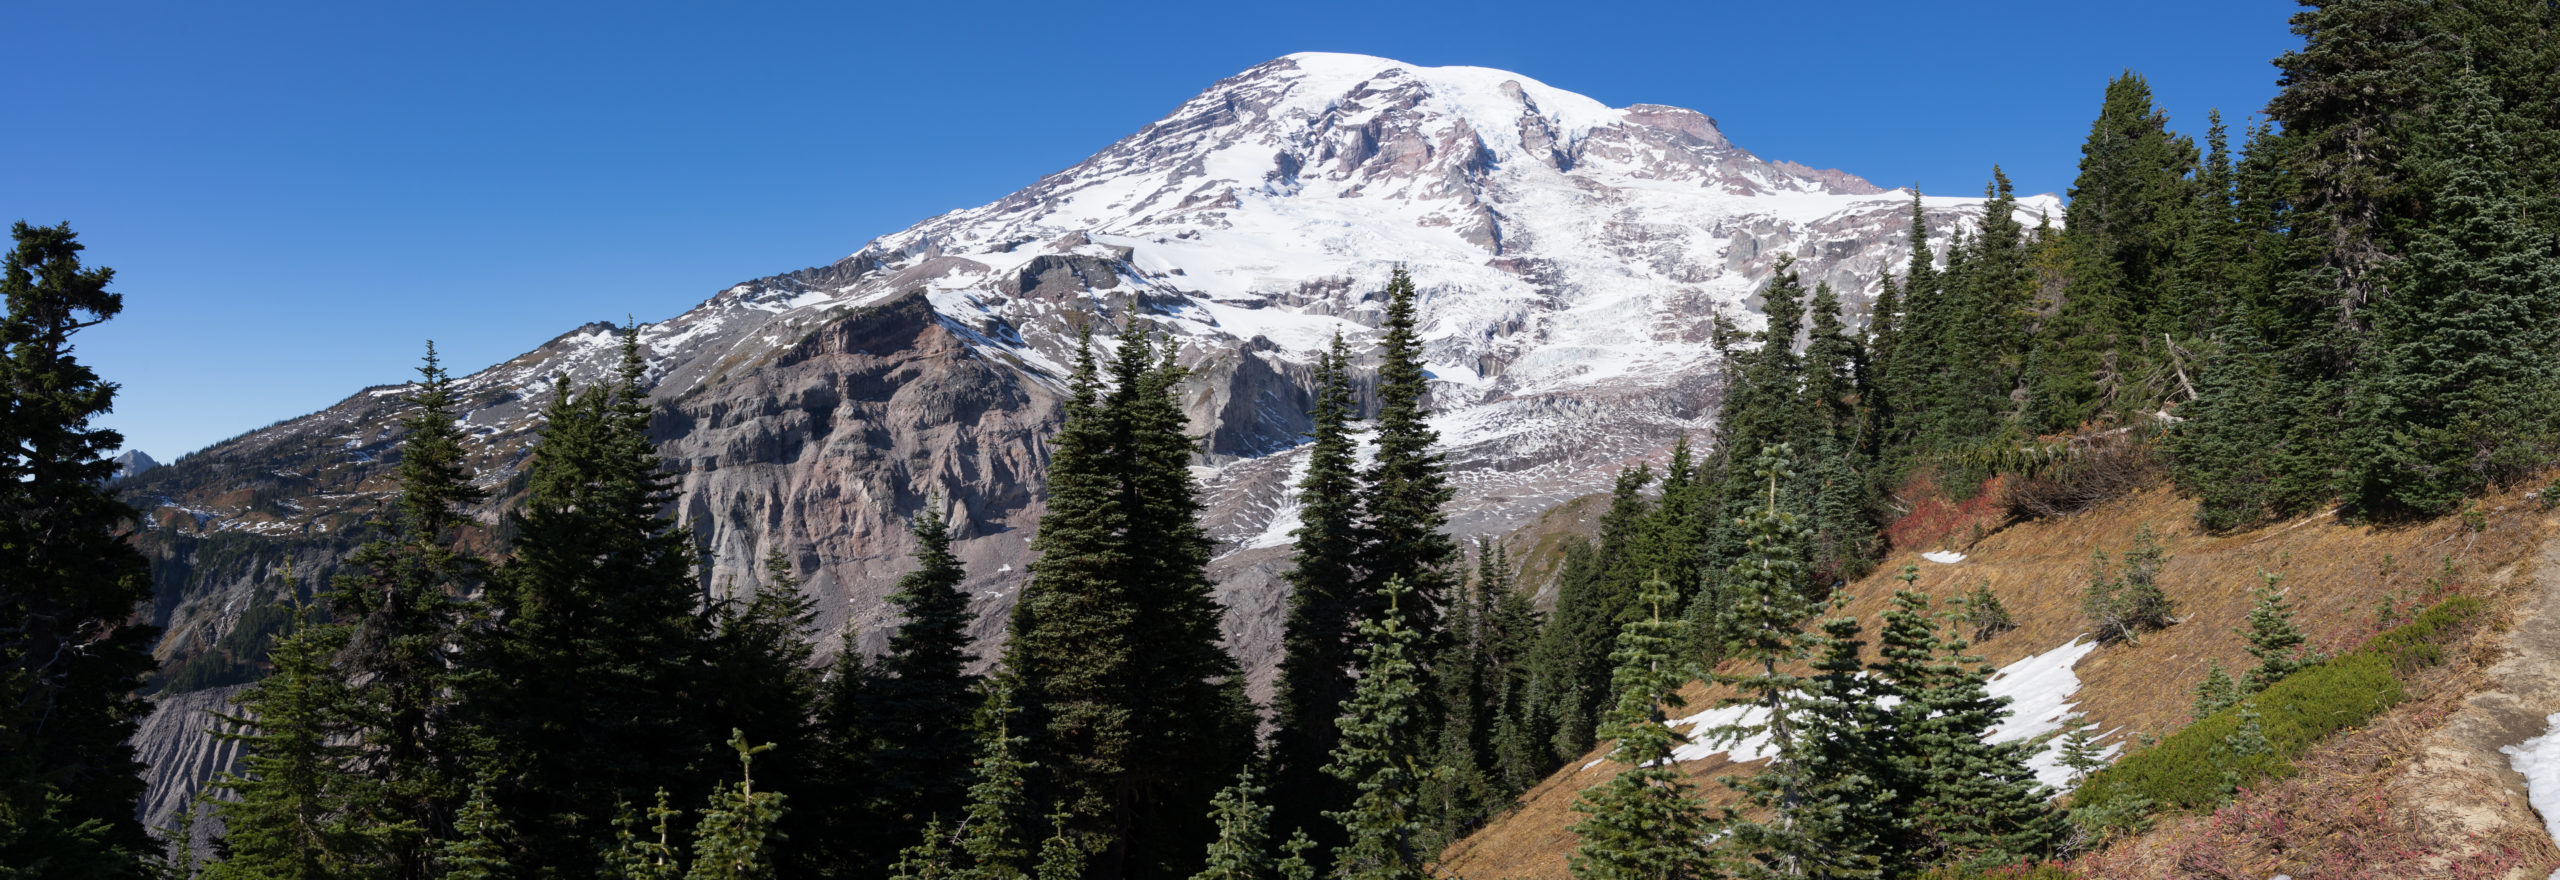 Mt Rainier as seen from the Paradise recreational area